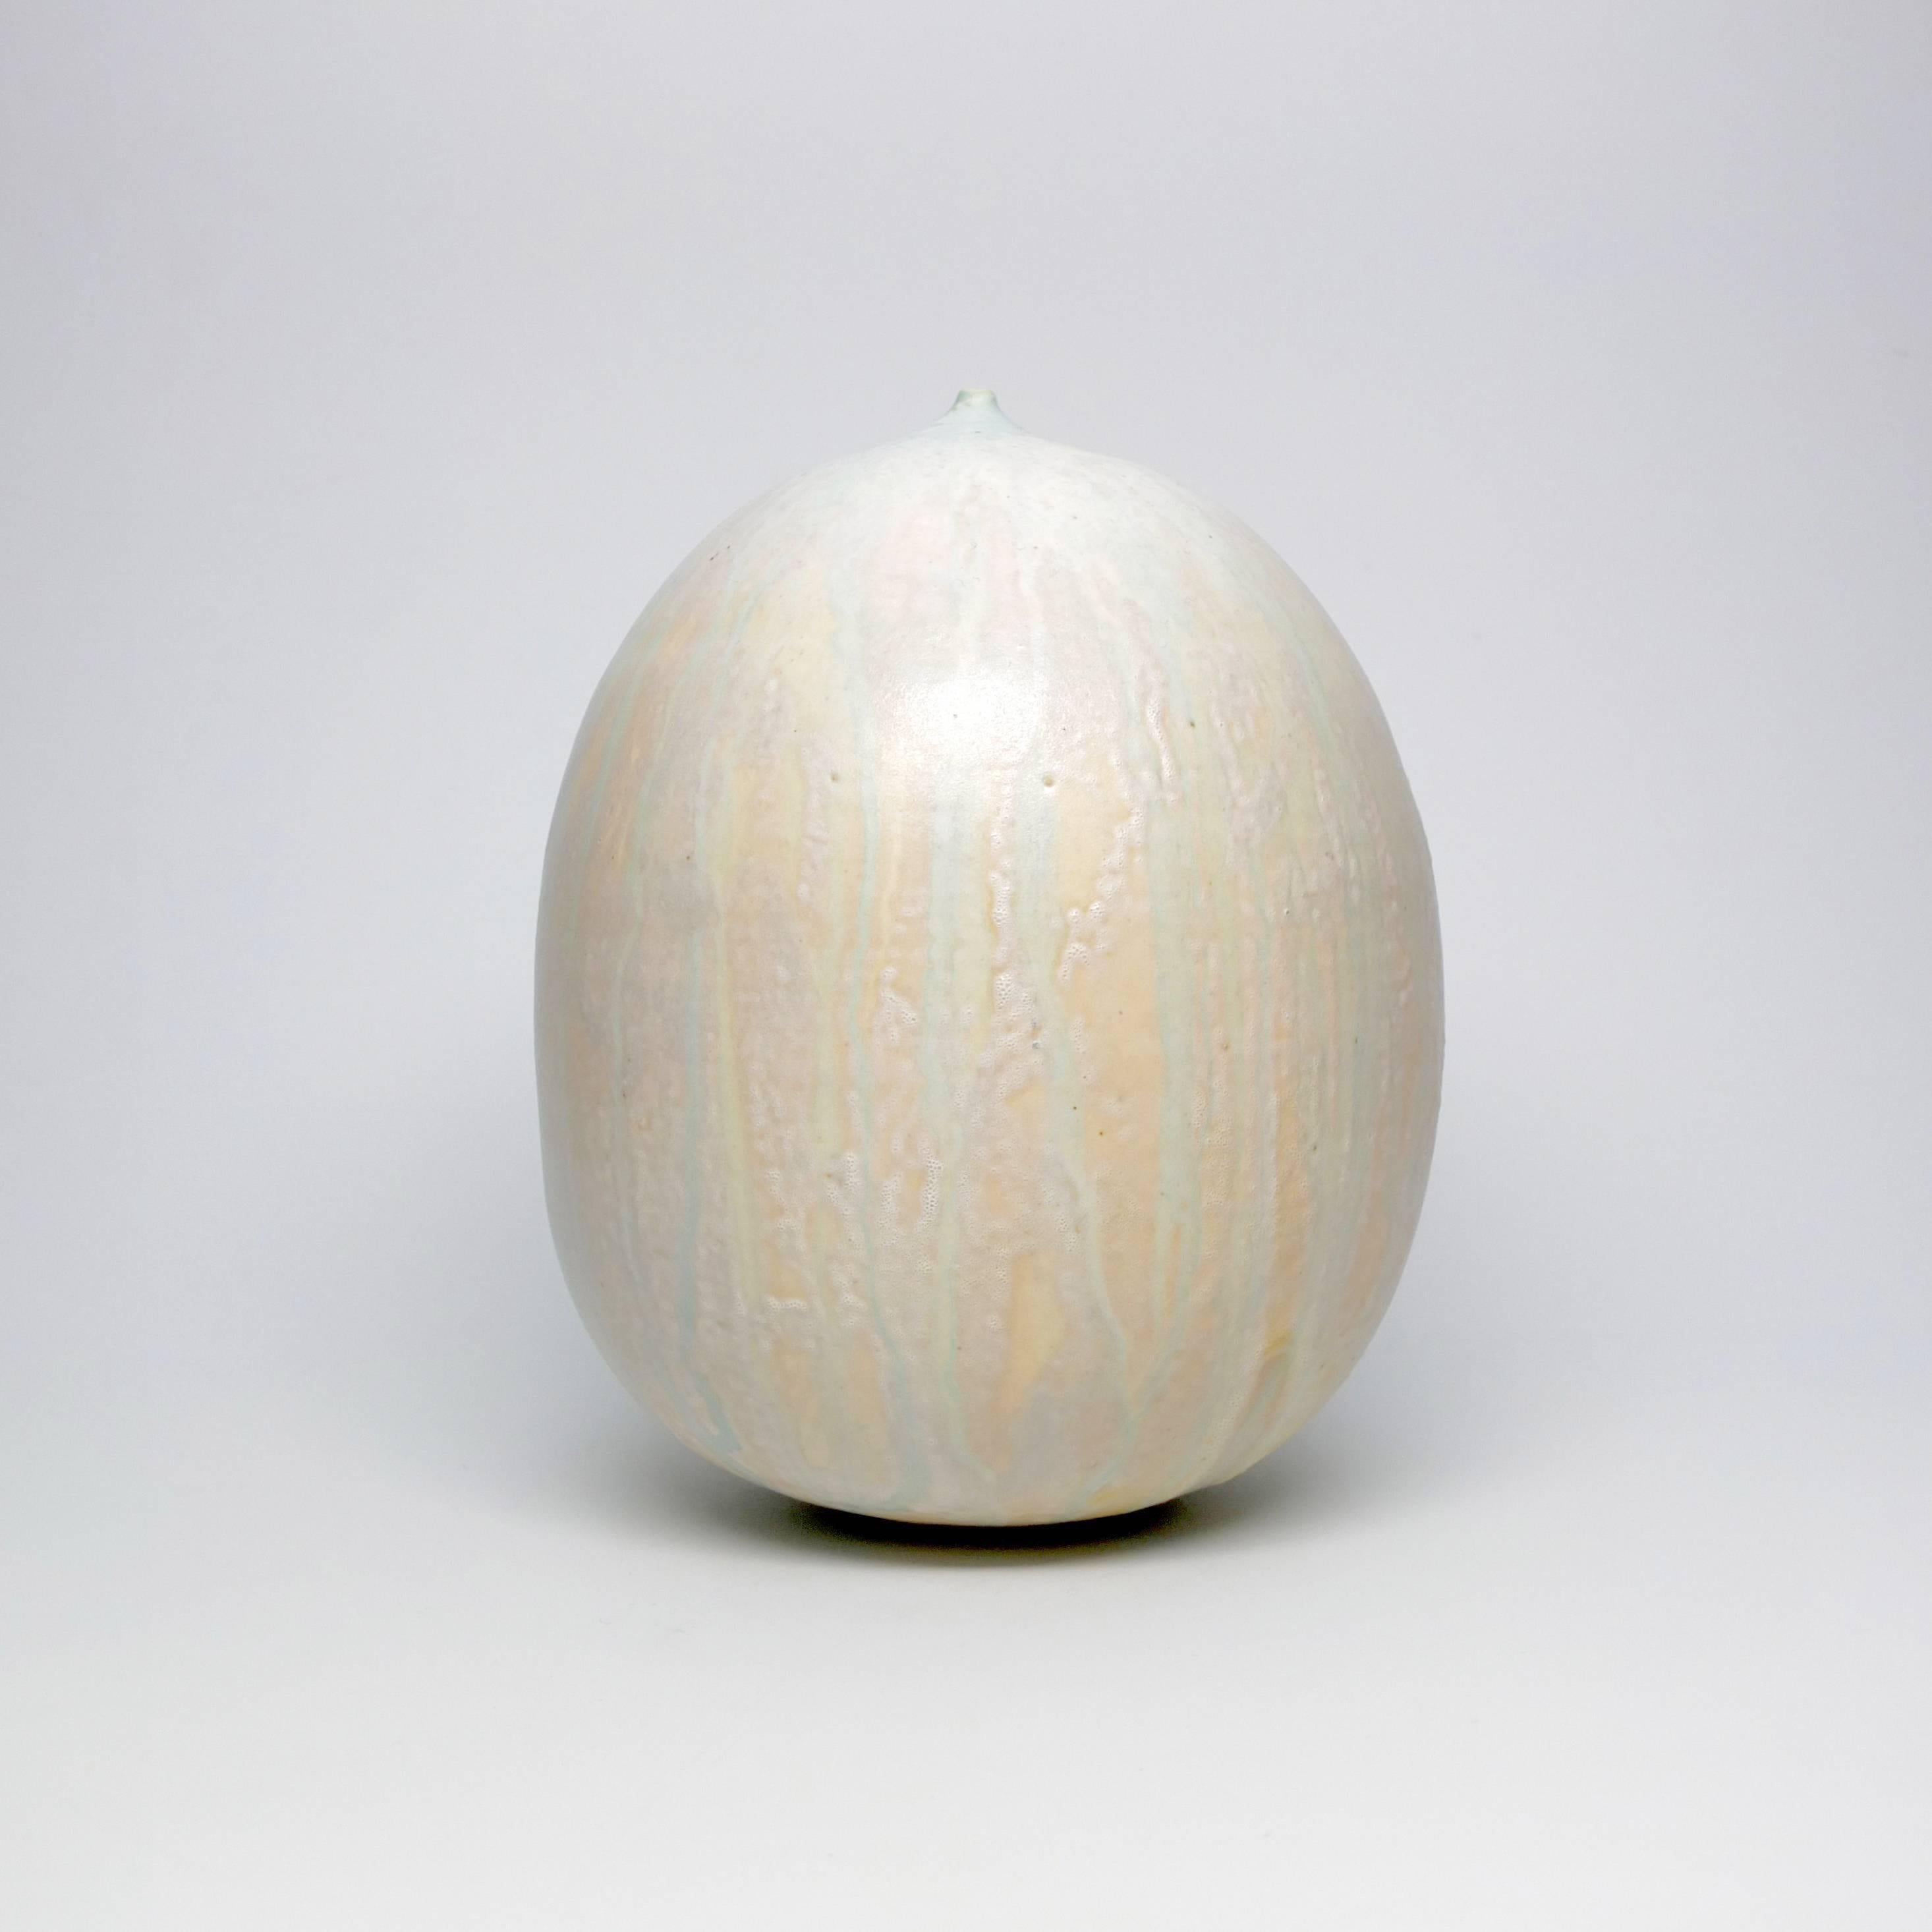 Modern Graceful Organic Ceramic Vessel by Artist Jeffrey Loura, 2016